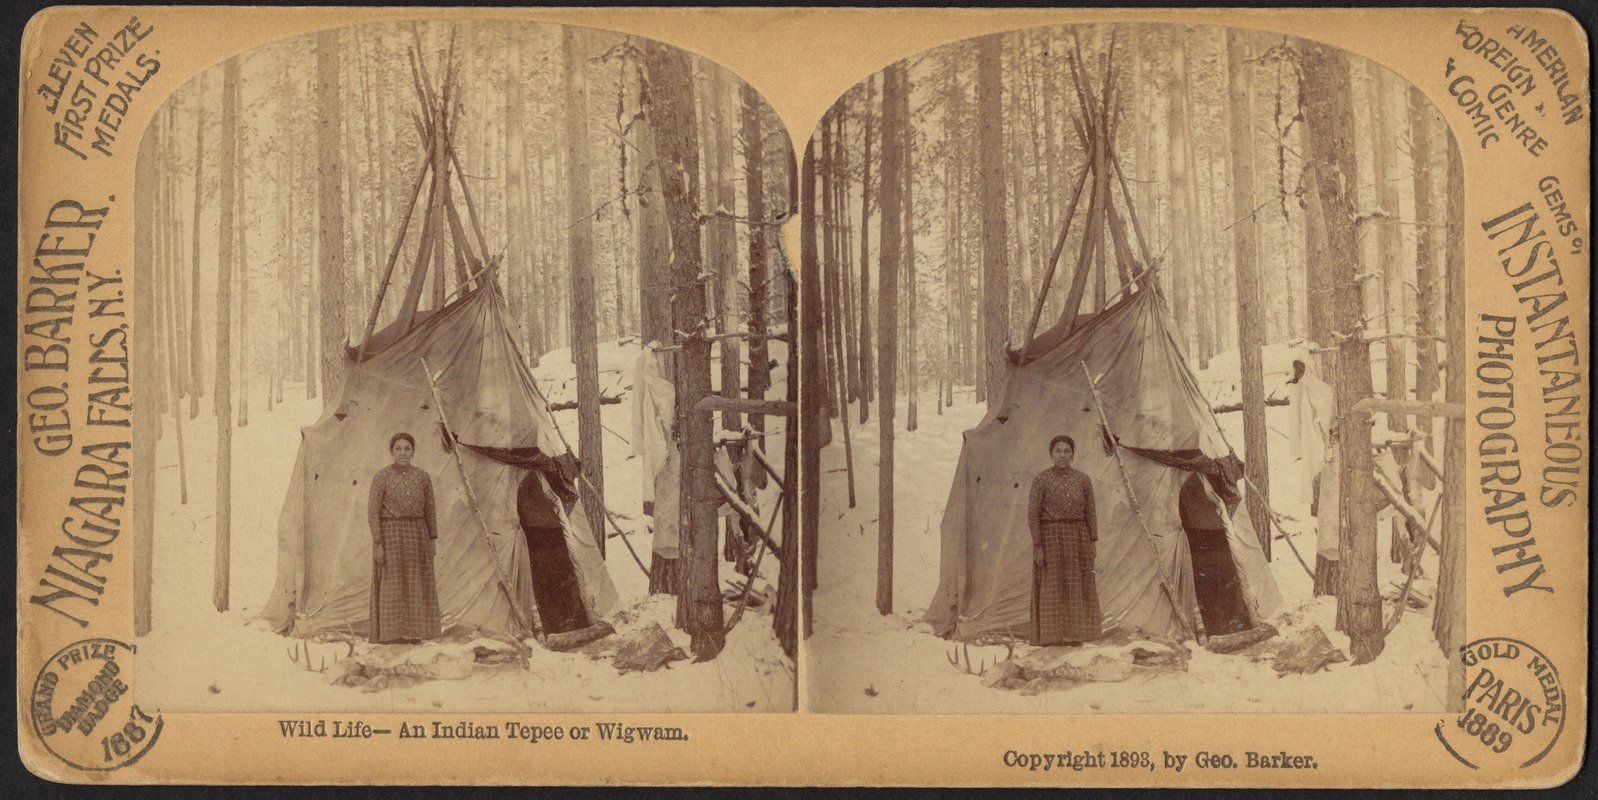 Wild life - an Indian tepee or wigwam